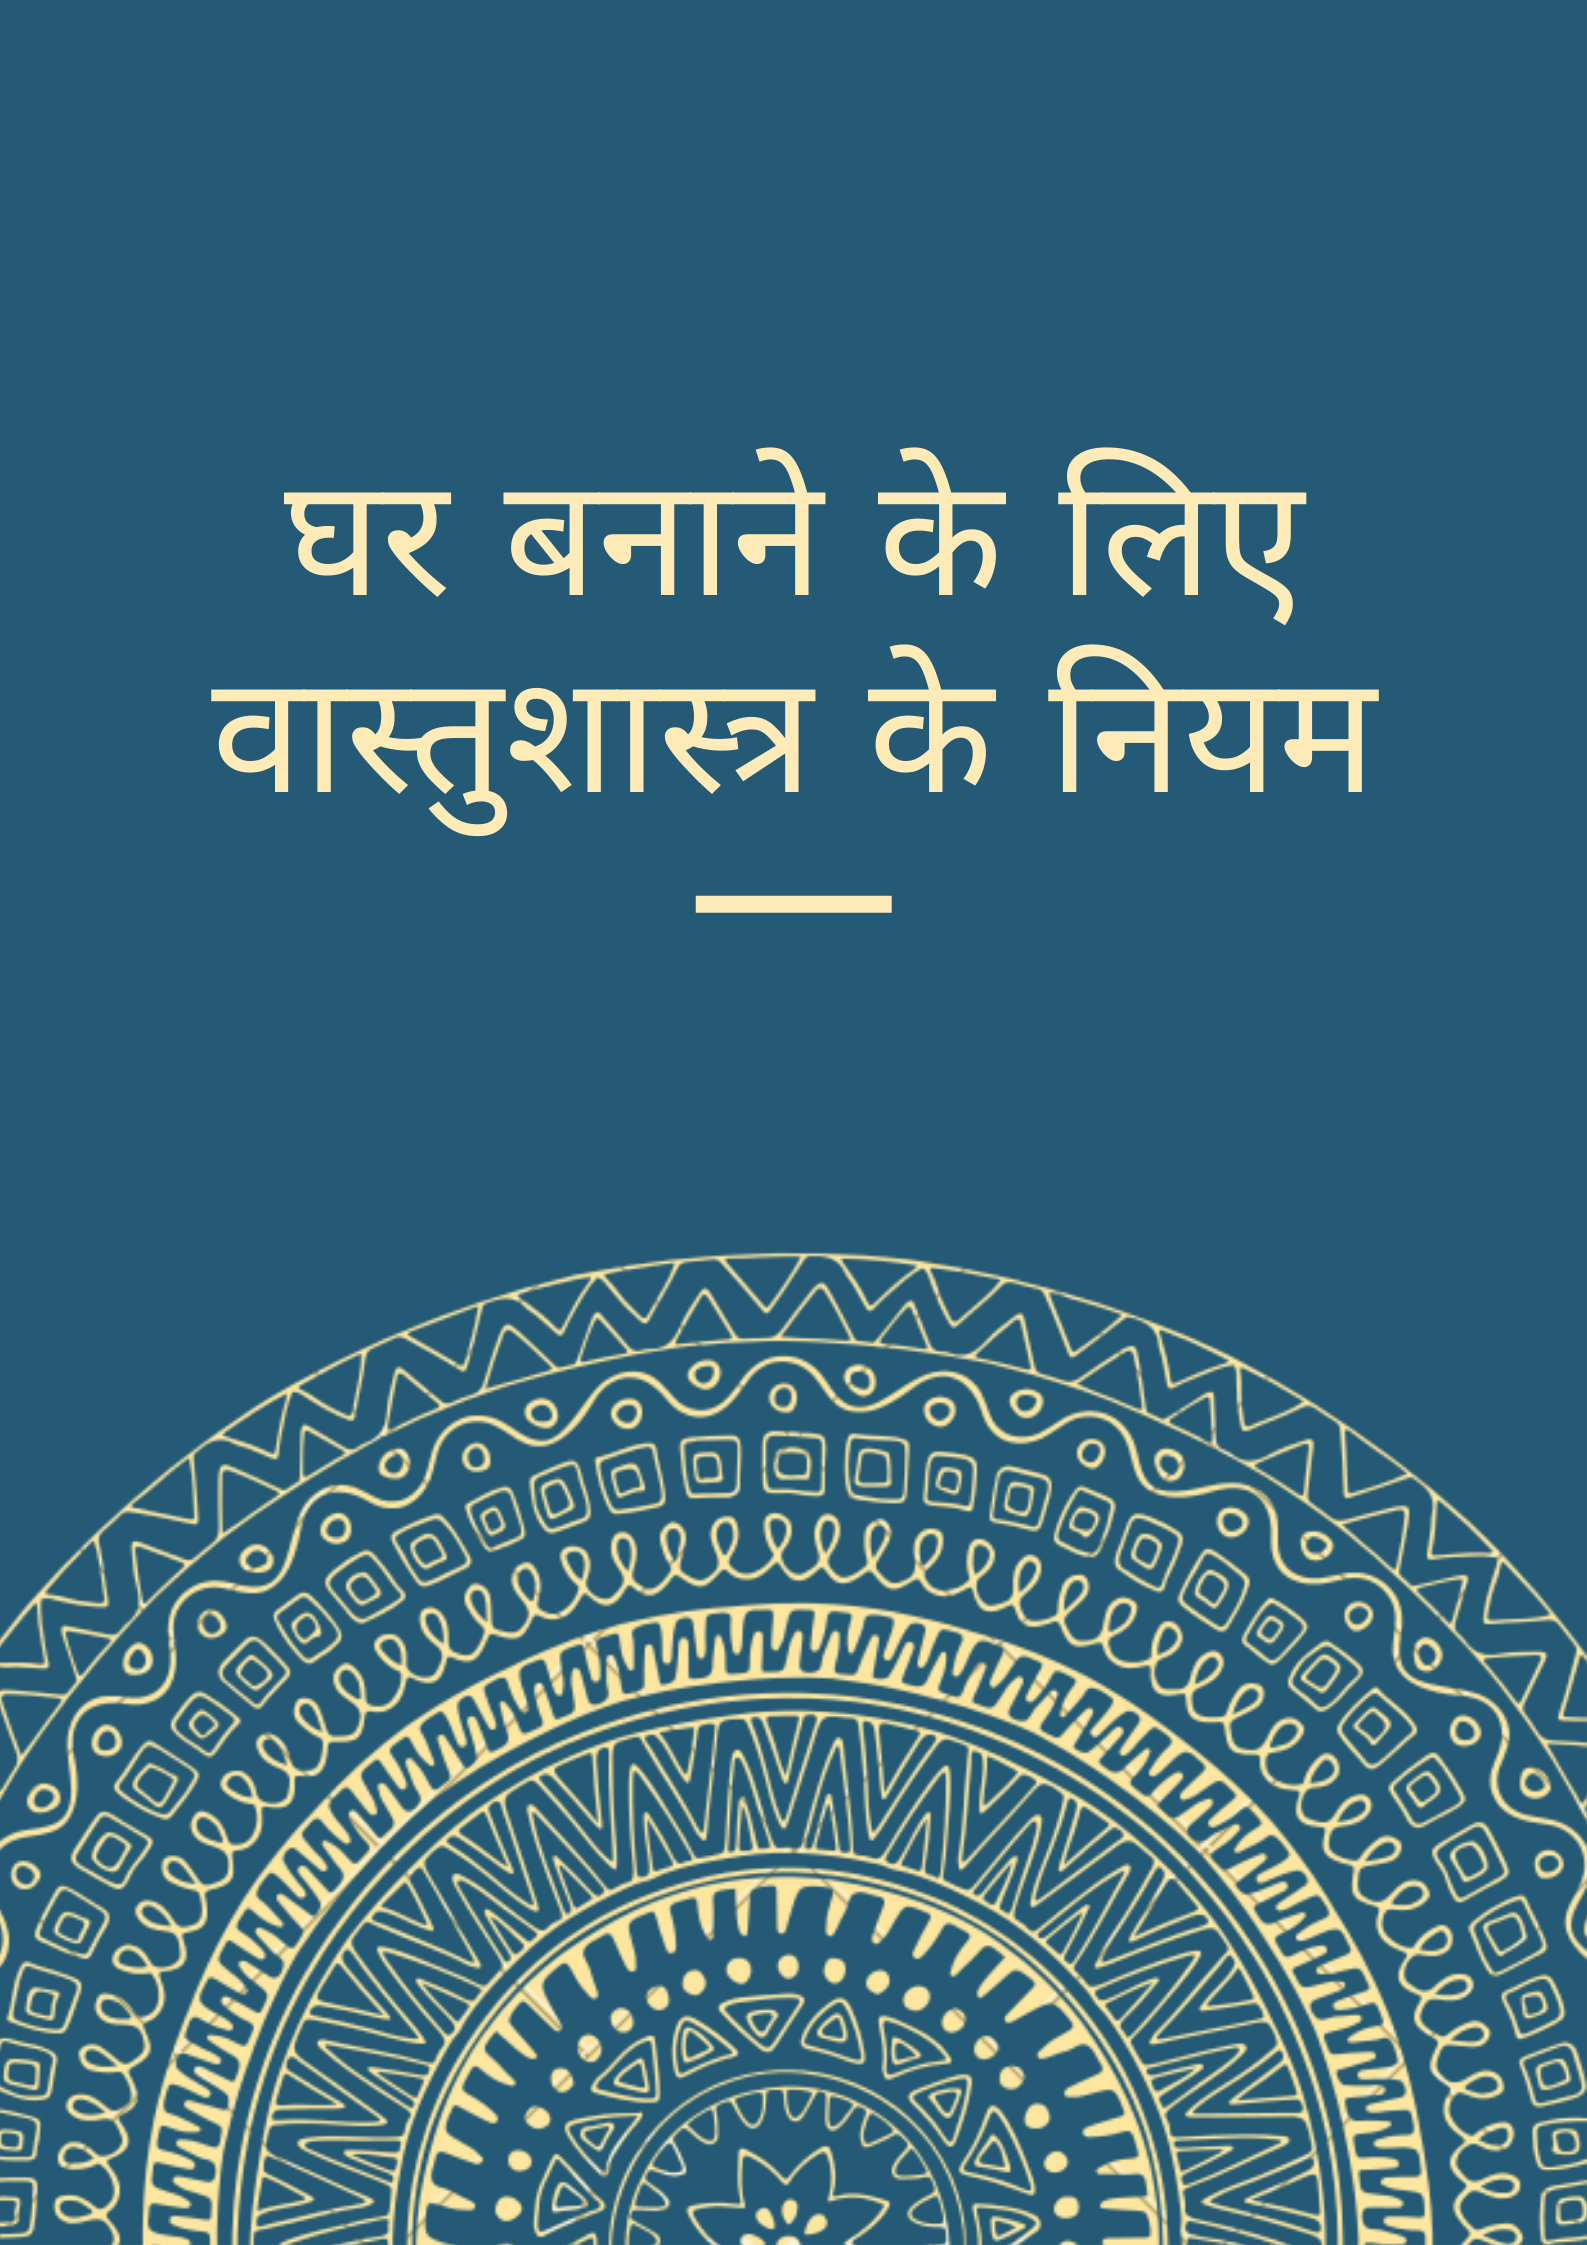 Vastu tips for home in hindi